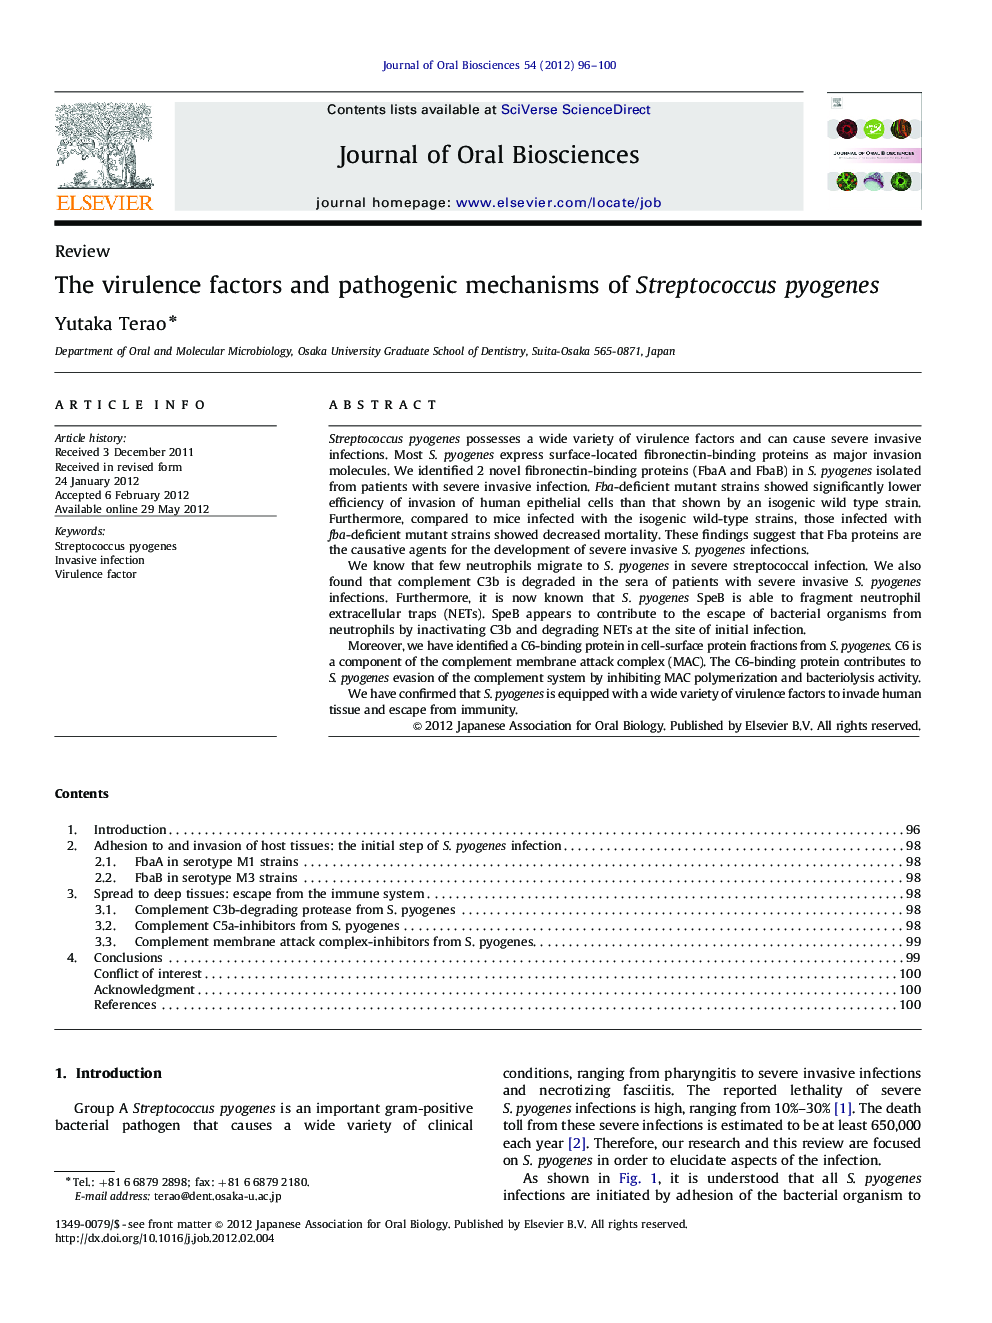 The virulence factors and pathogenic mechanisms of Streptococcus pyogenes